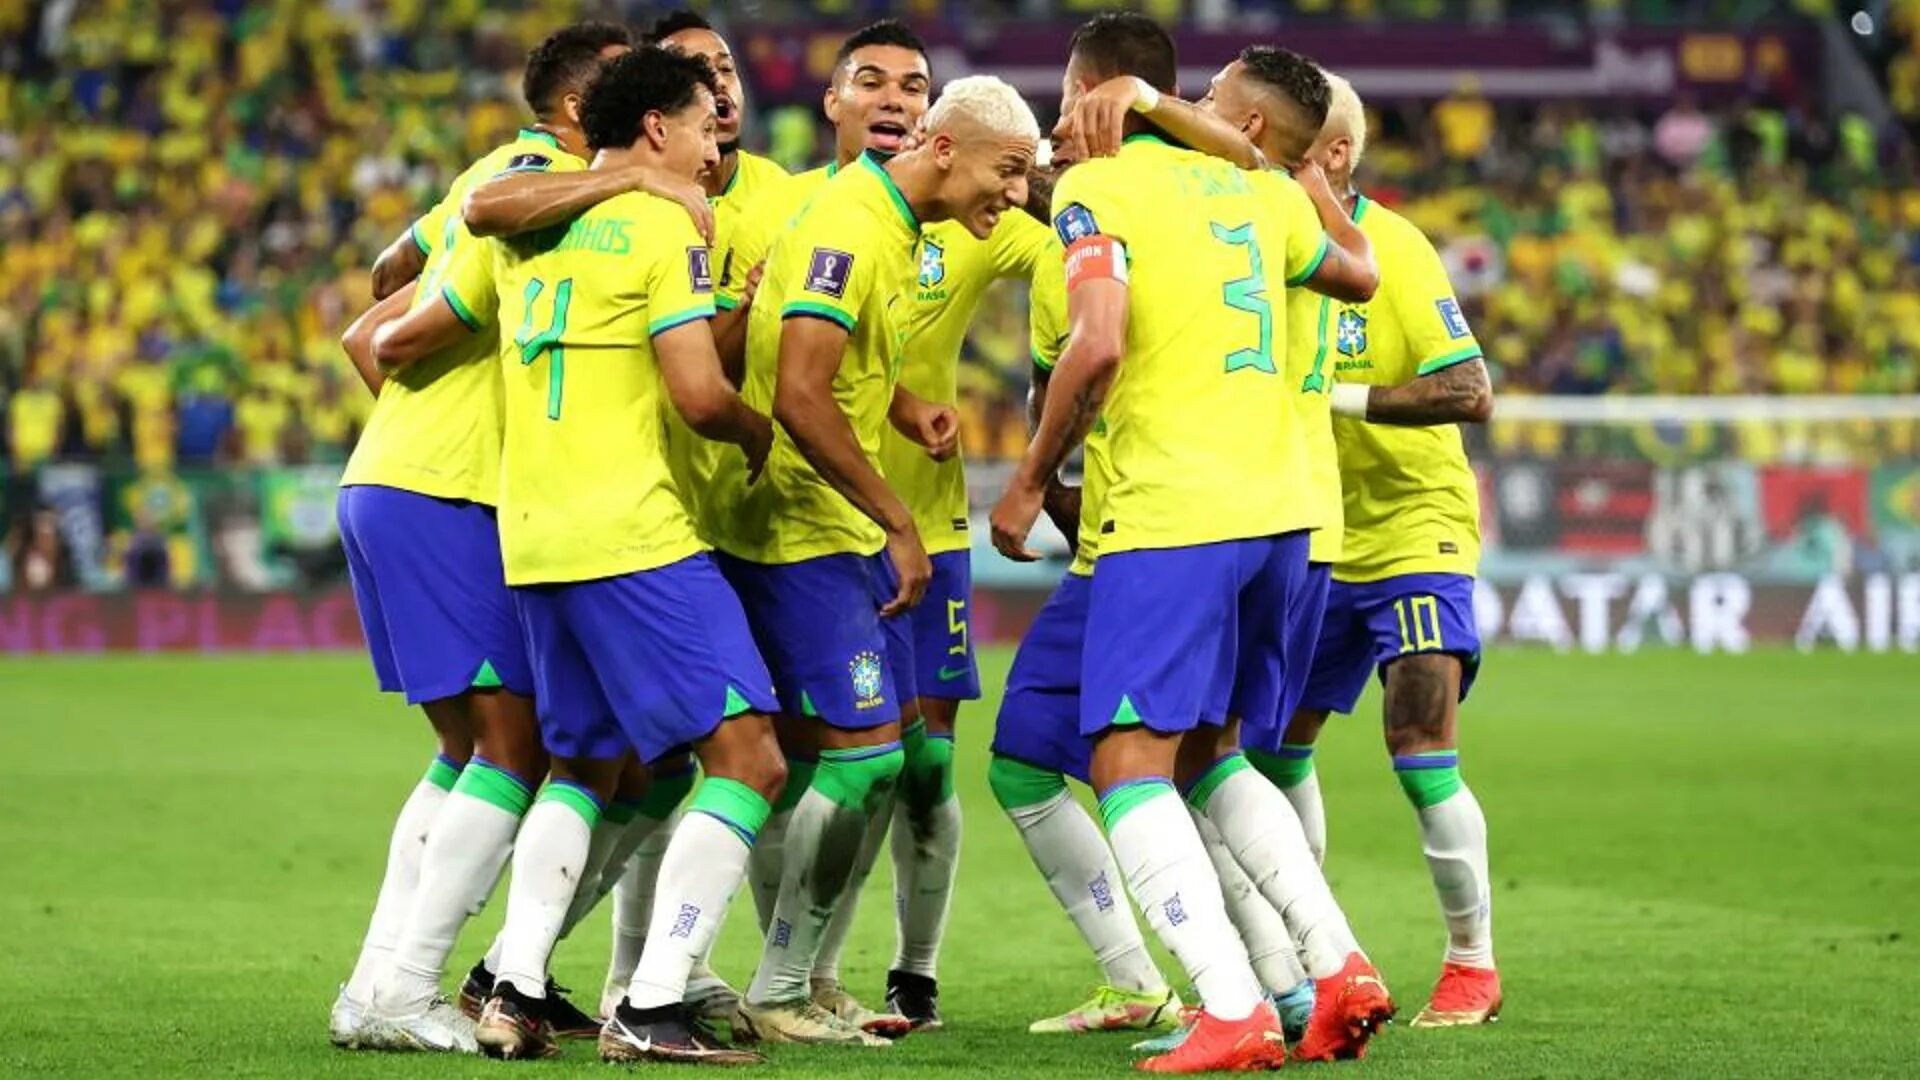 Ришарлисон Бразилия. Бразильский футбол. Команда Бразилии. Сборная Бразилии. Испания бразилия футбол товарищеский матч